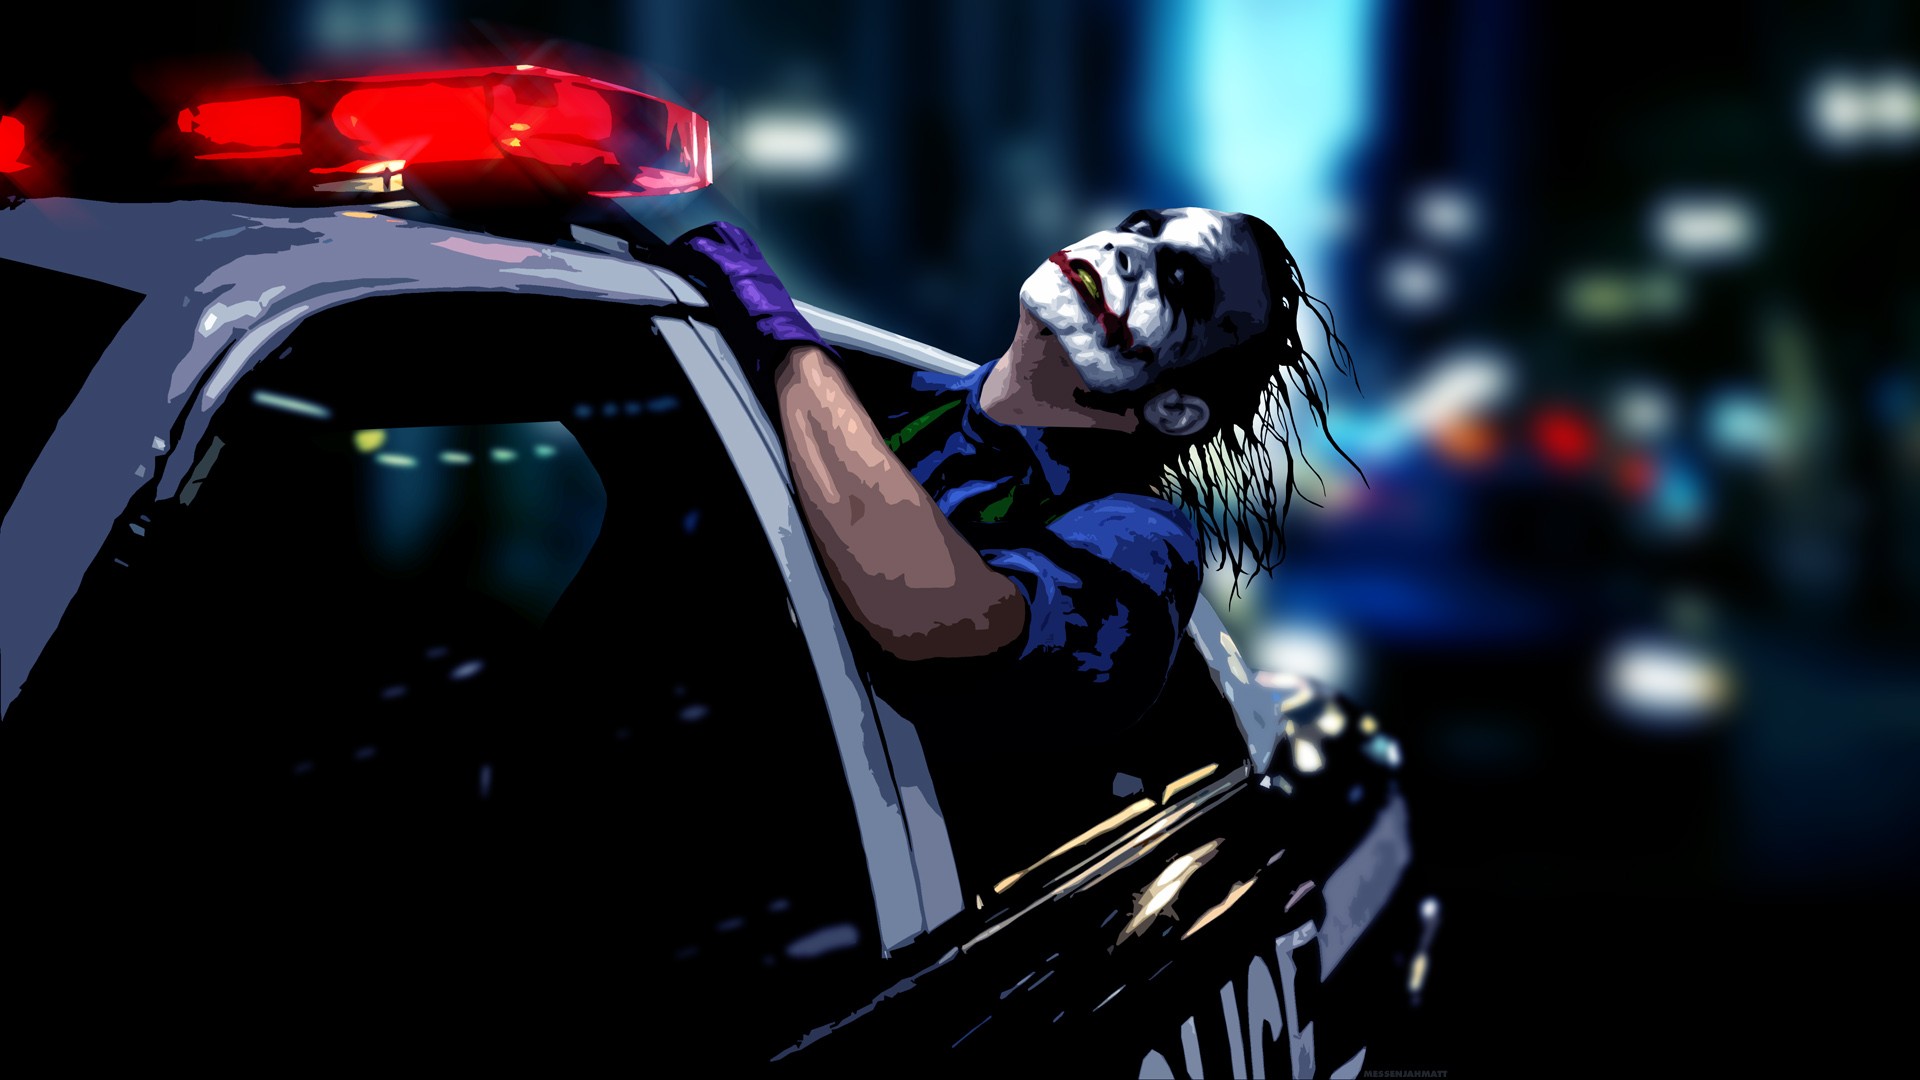 General 1920x1080 movies Batman The Dark Knight Joker MessenjahMatt villains car vehicle police cars Heath Ledger